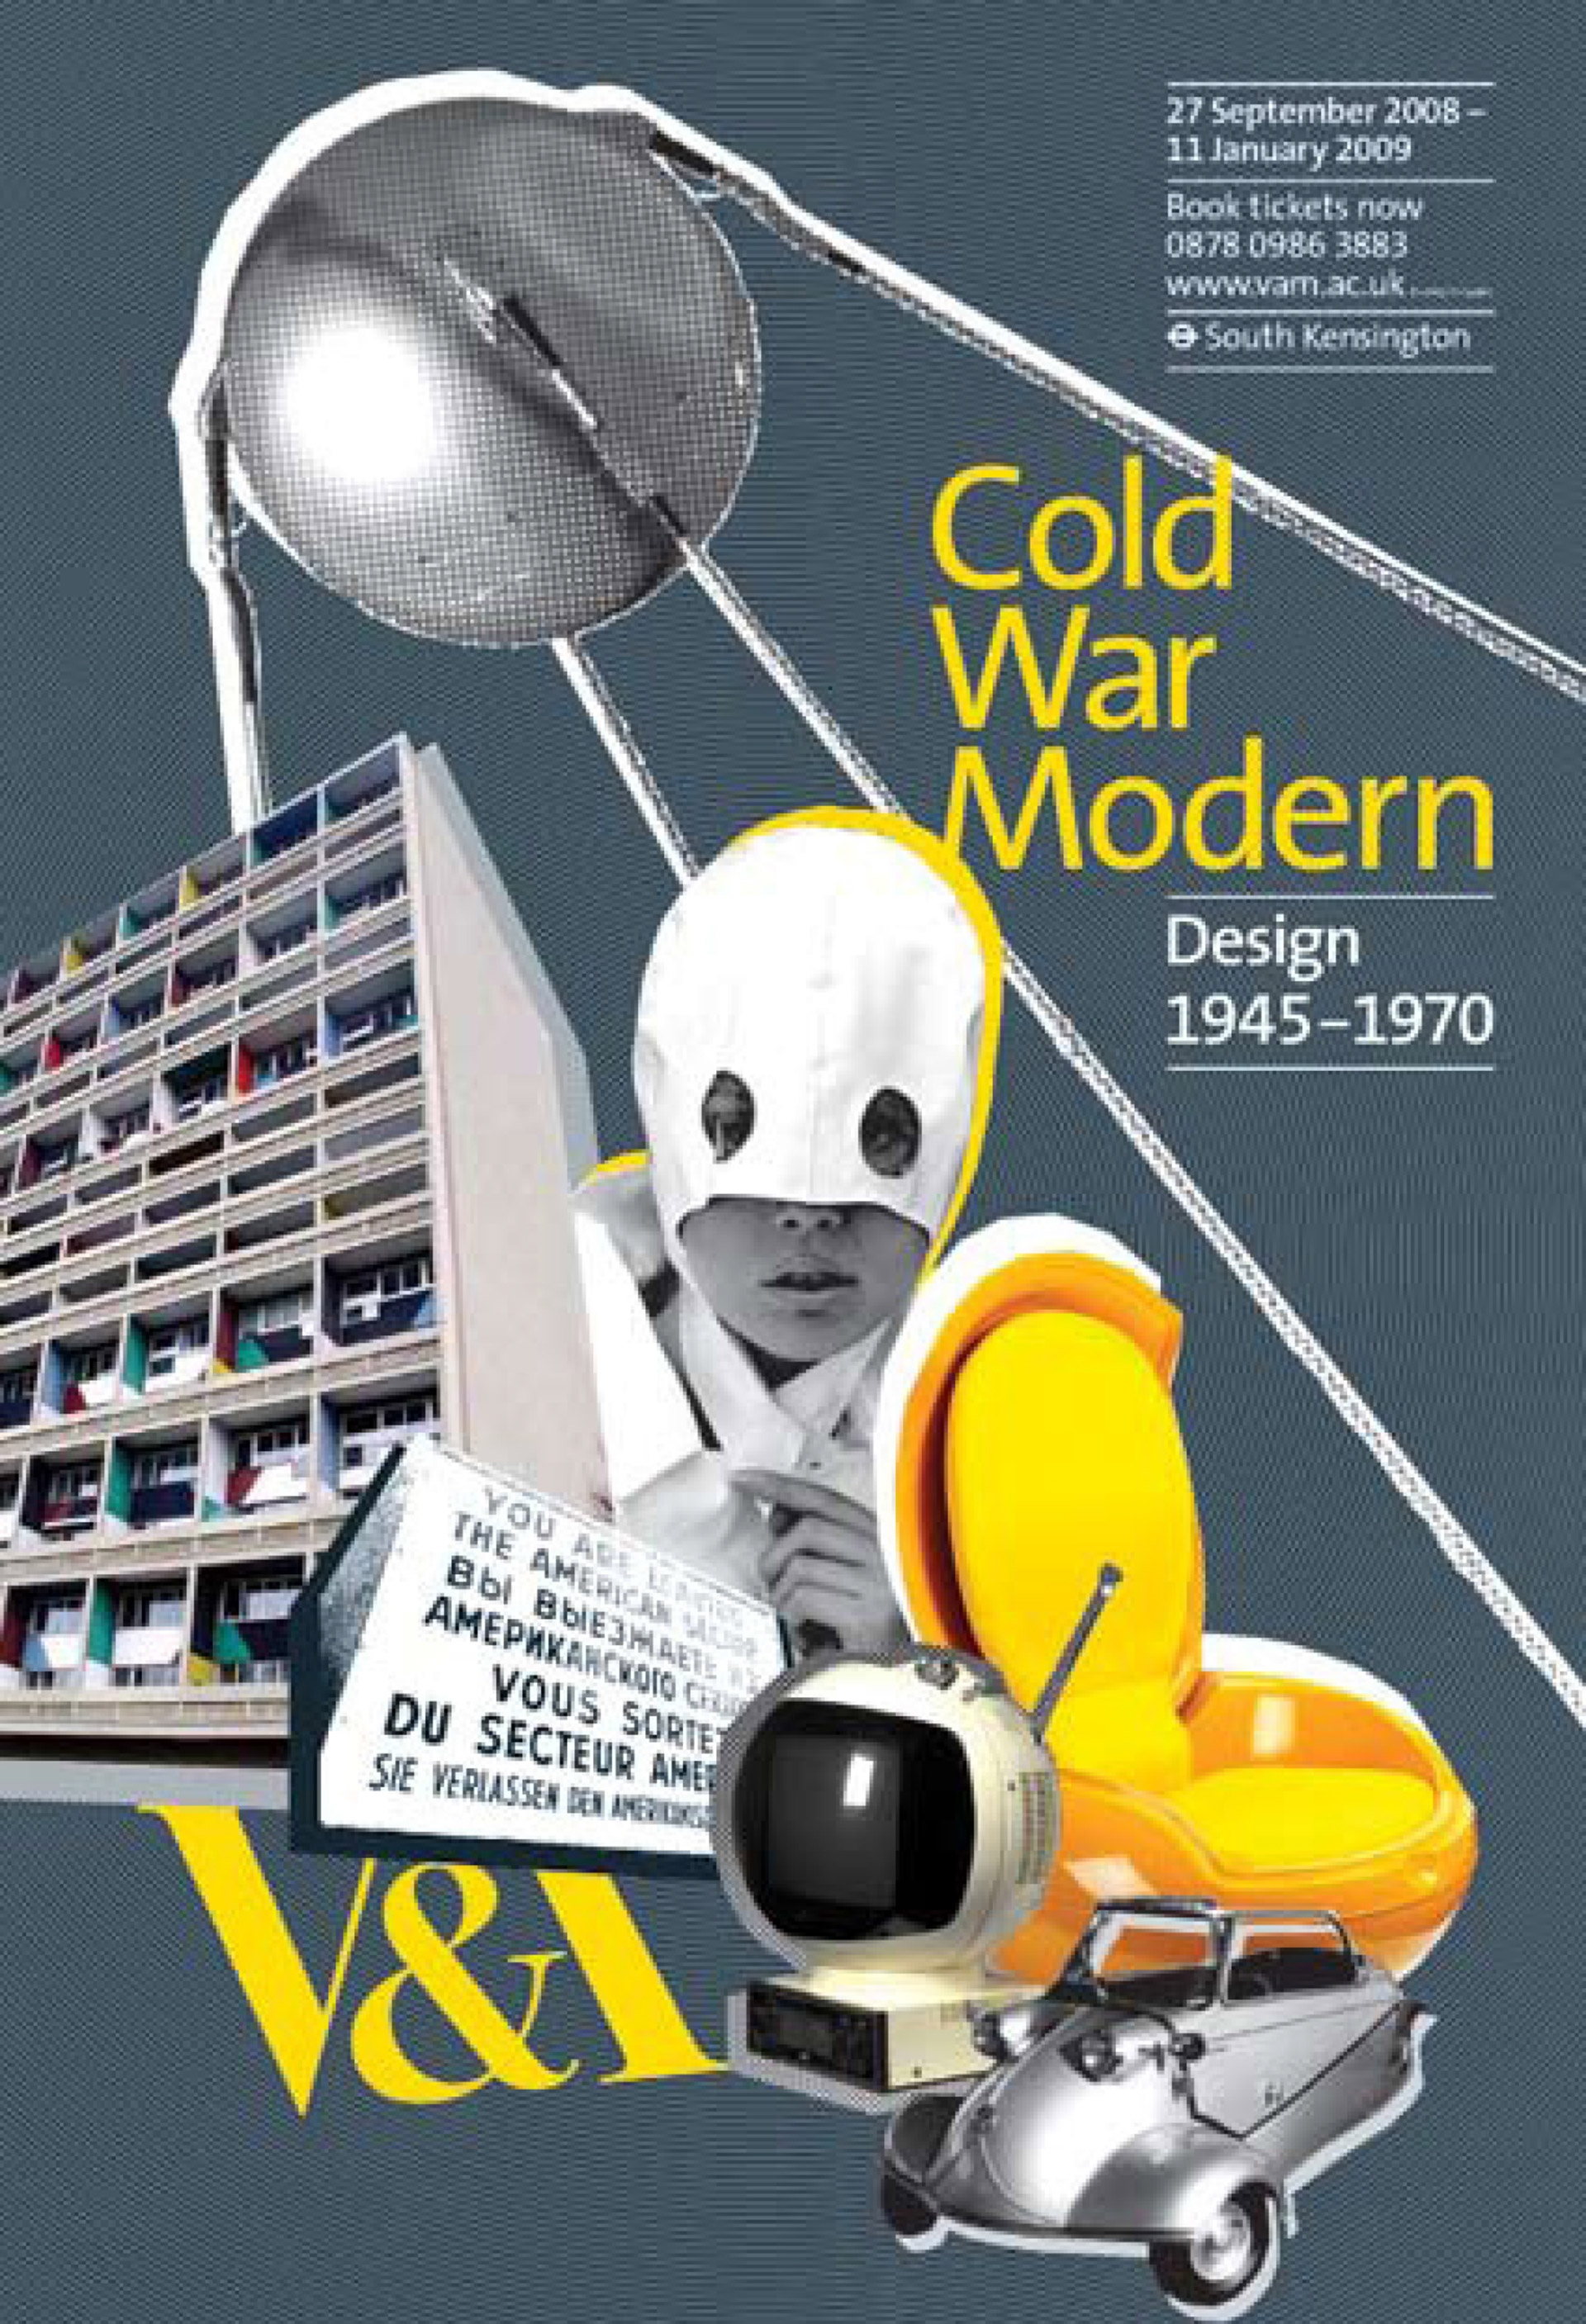 Cold War Modern marketing campaign for V&A South Kensington designed by Irish Butcher